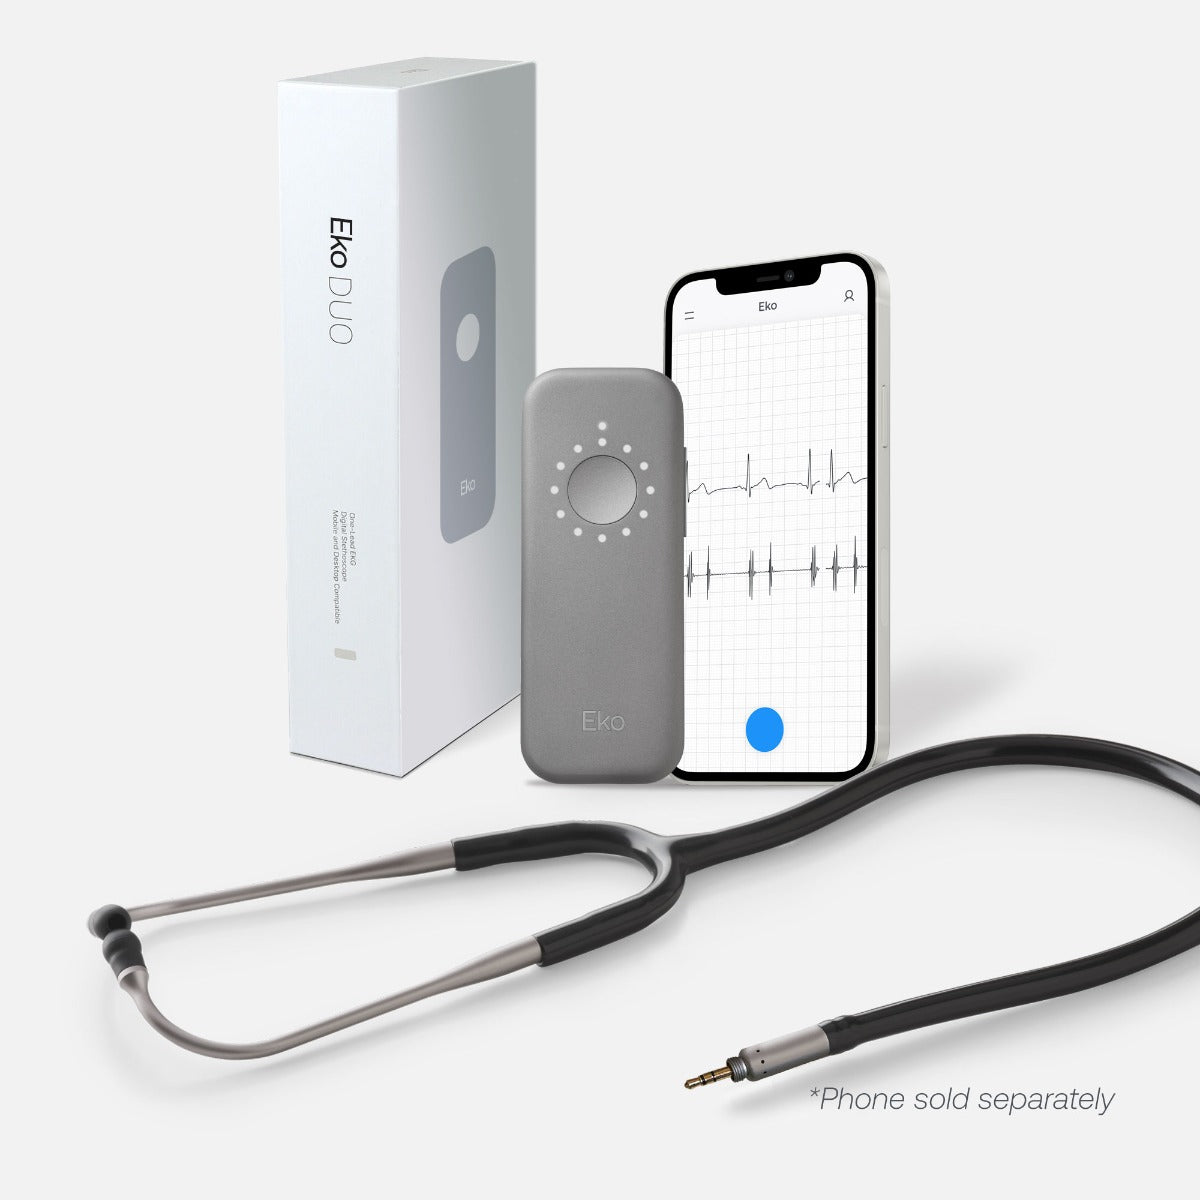 Eko DUO Portable ECG + Digital Stethoscope - 2 in 1 Cardiac Assessment Tool Eko Health